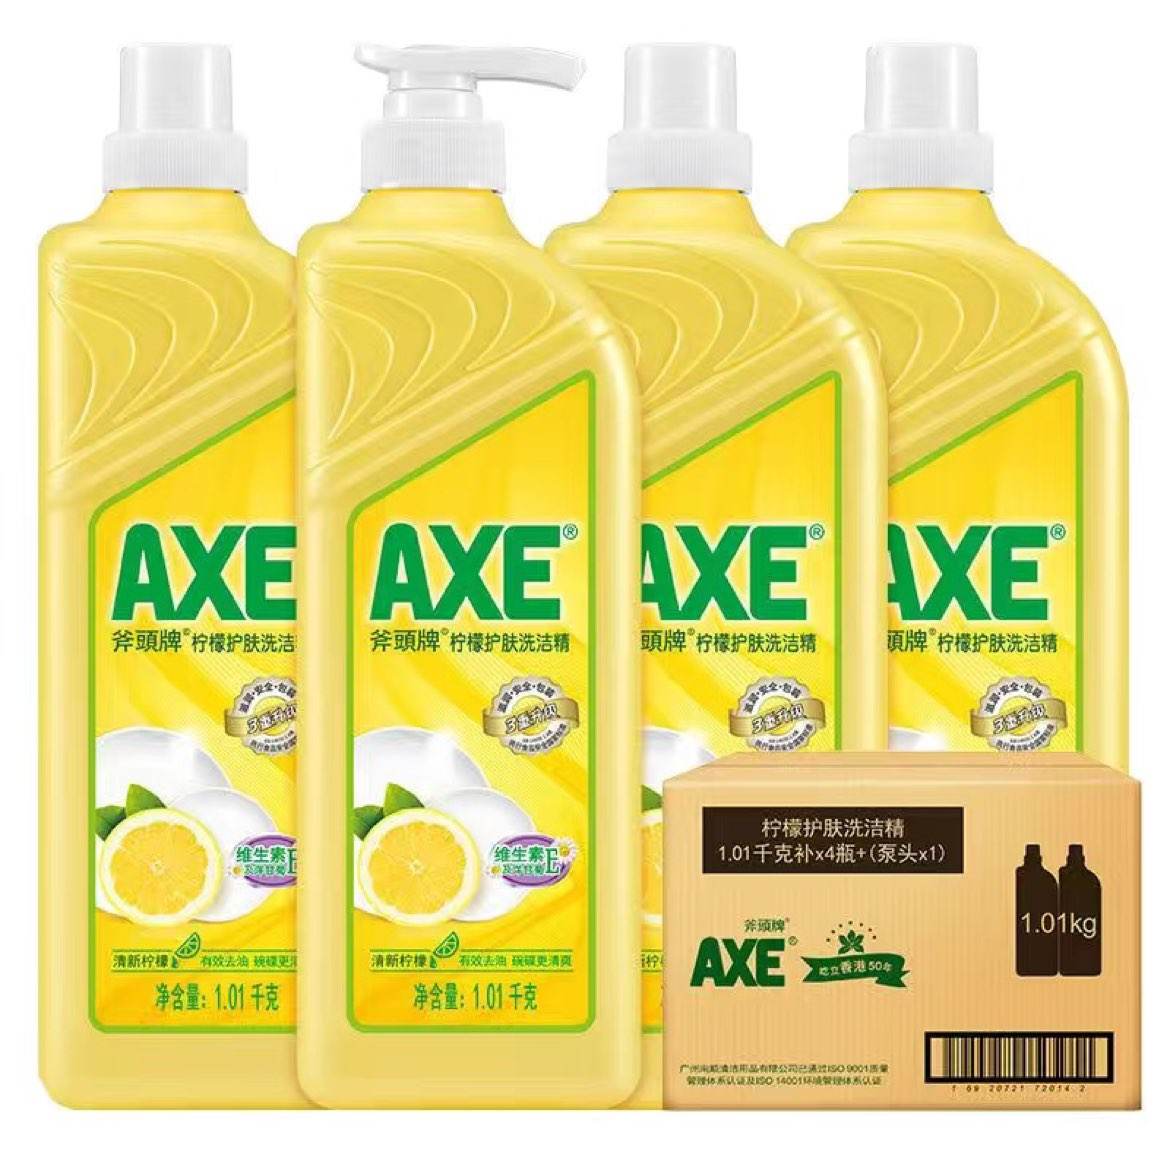 AXE 斧头 牌柠檬护肤洗洁精4瓶共4040g 29.99元包邮